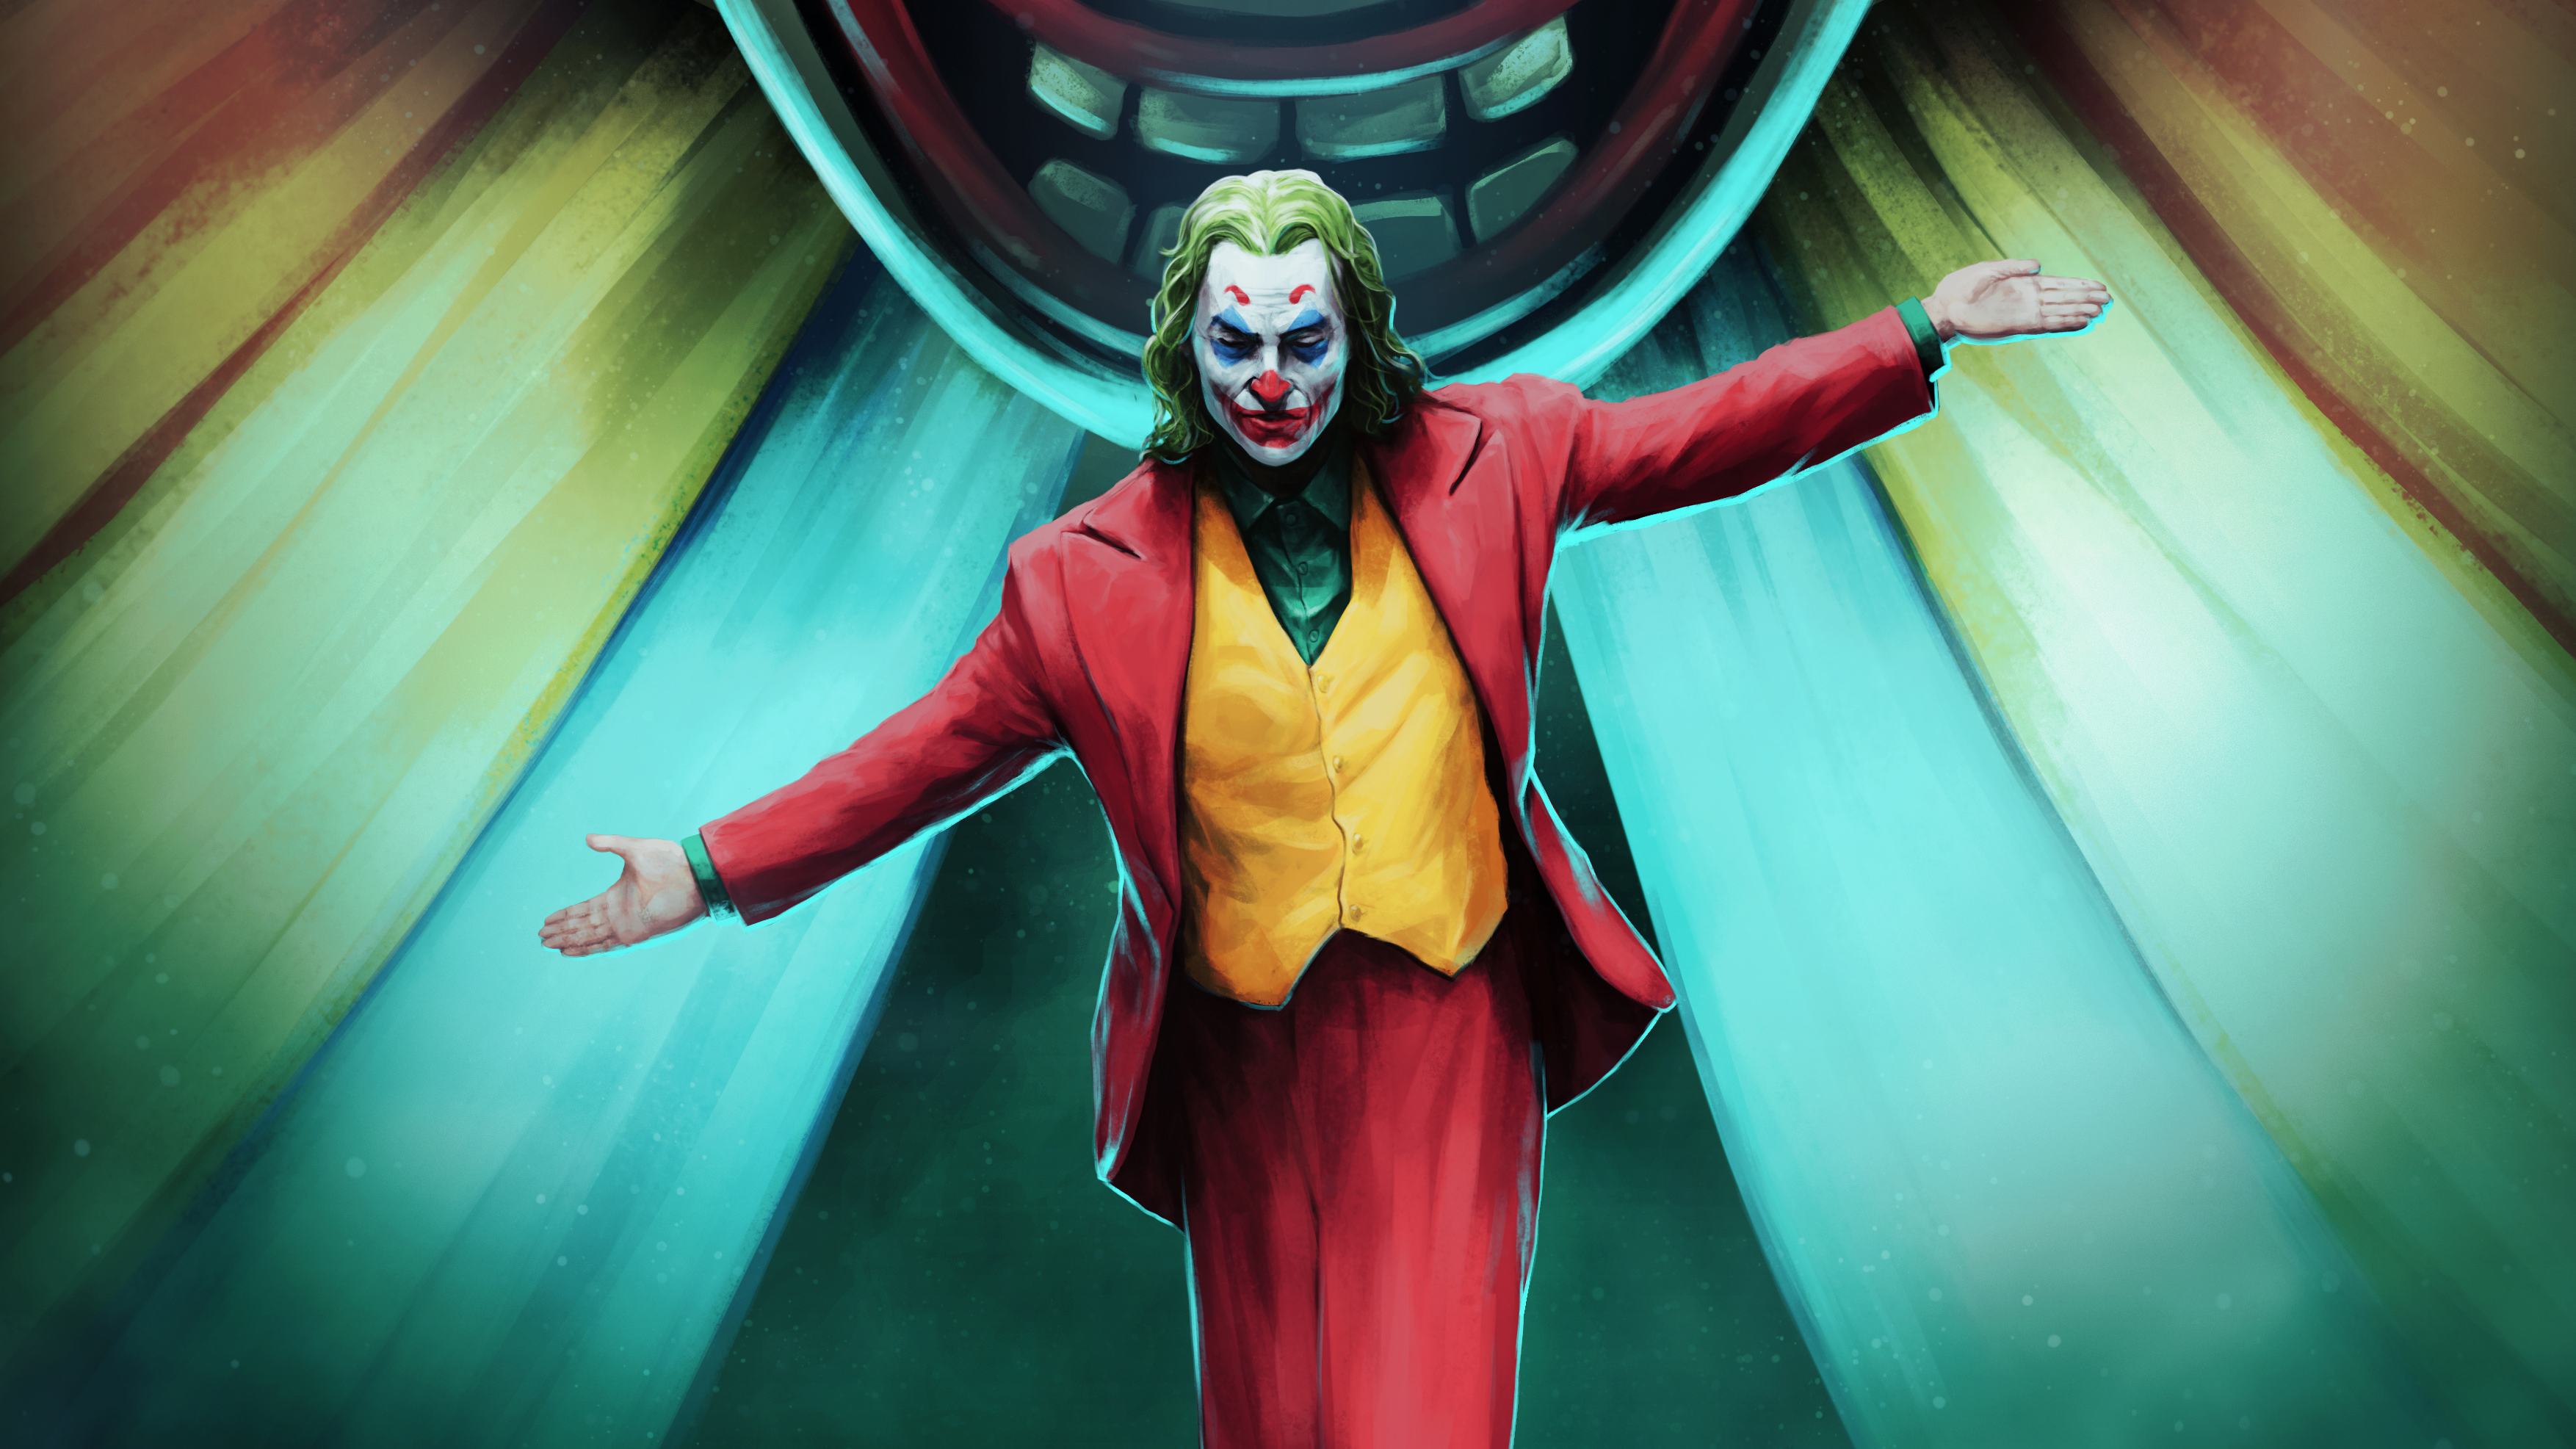 Joker Movie Art Wallpaper,HD Movies Wallpapers,4k Wallpapers,Images ...